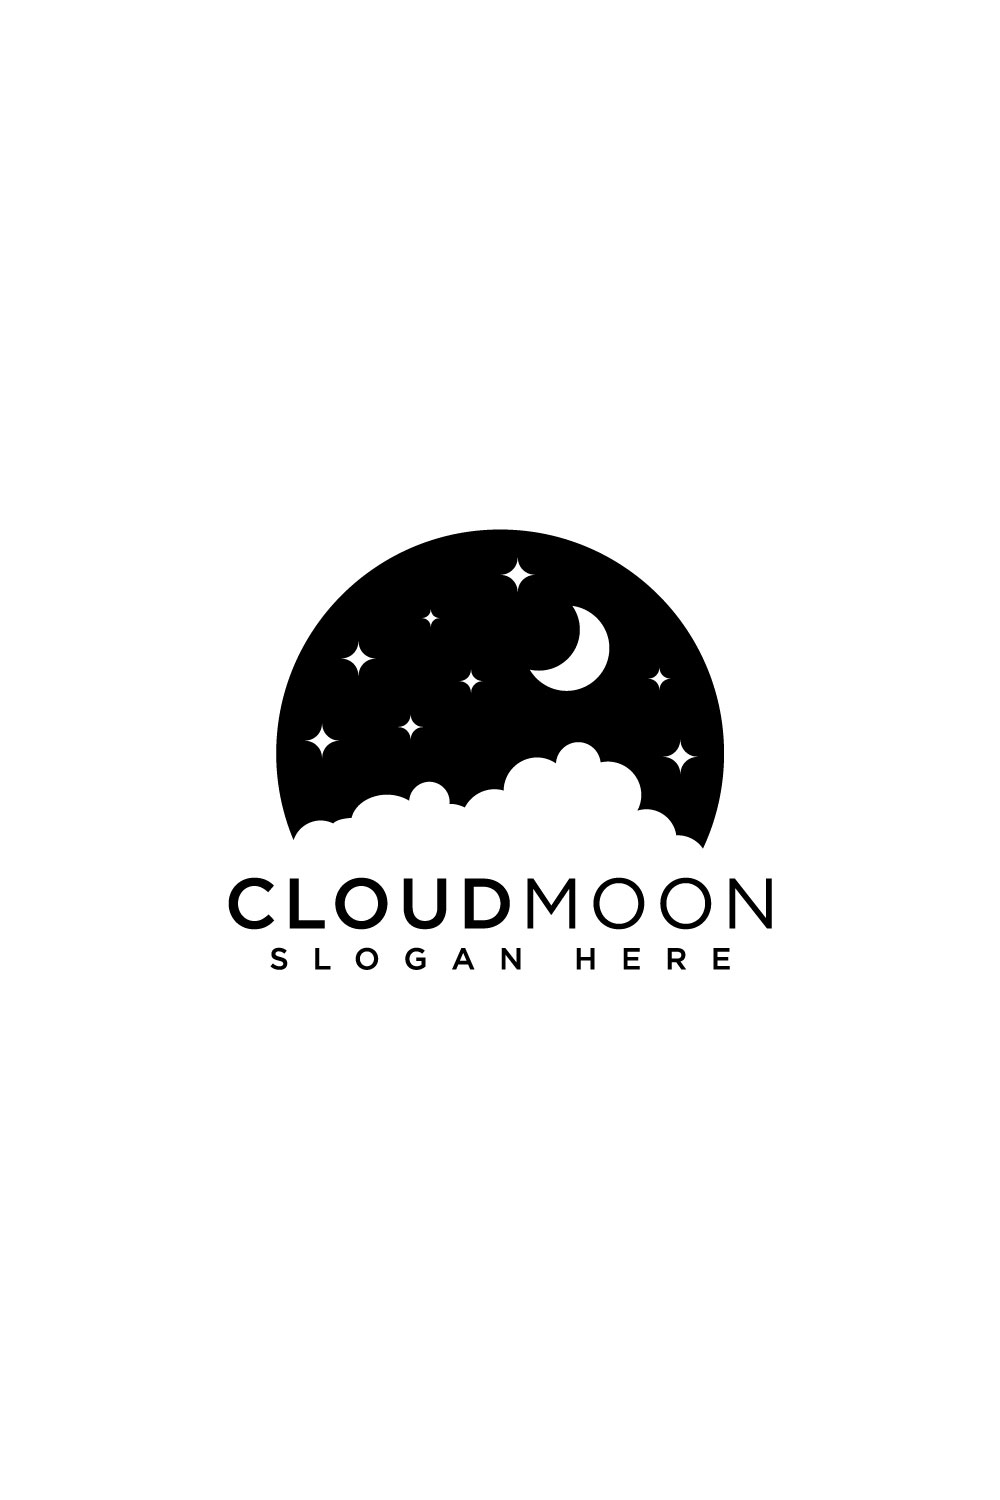 cloud moon logo design vector pinterest preview image.